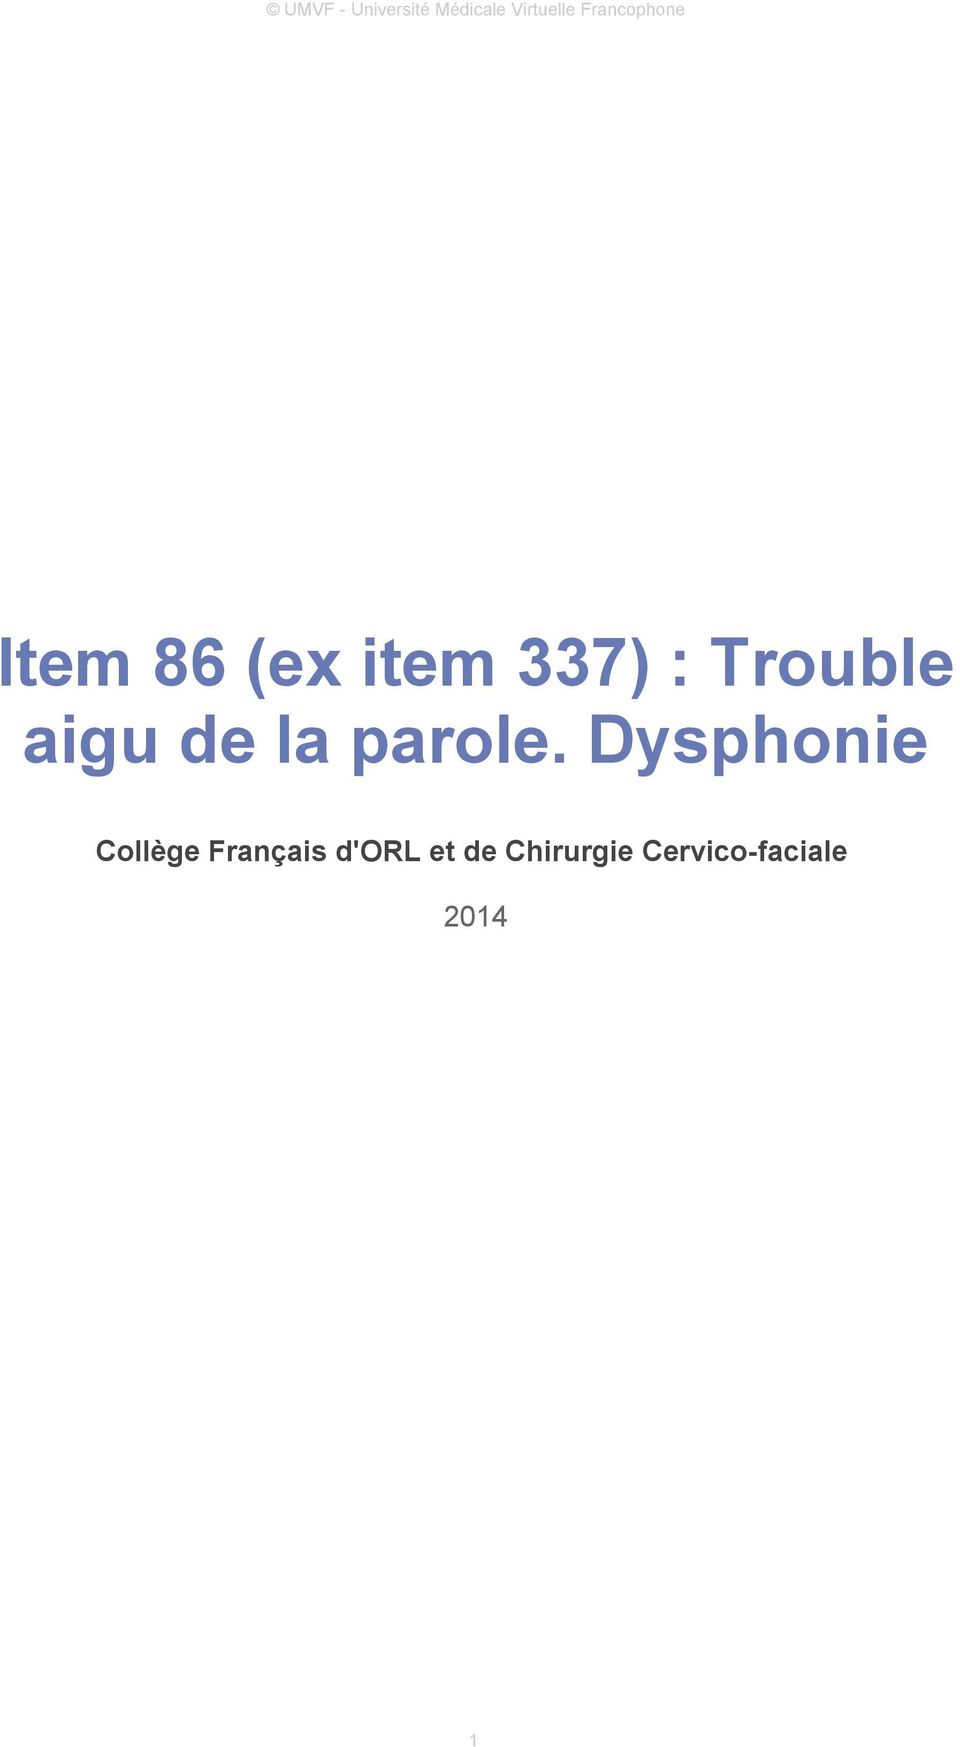 Dysphonie Collège Français